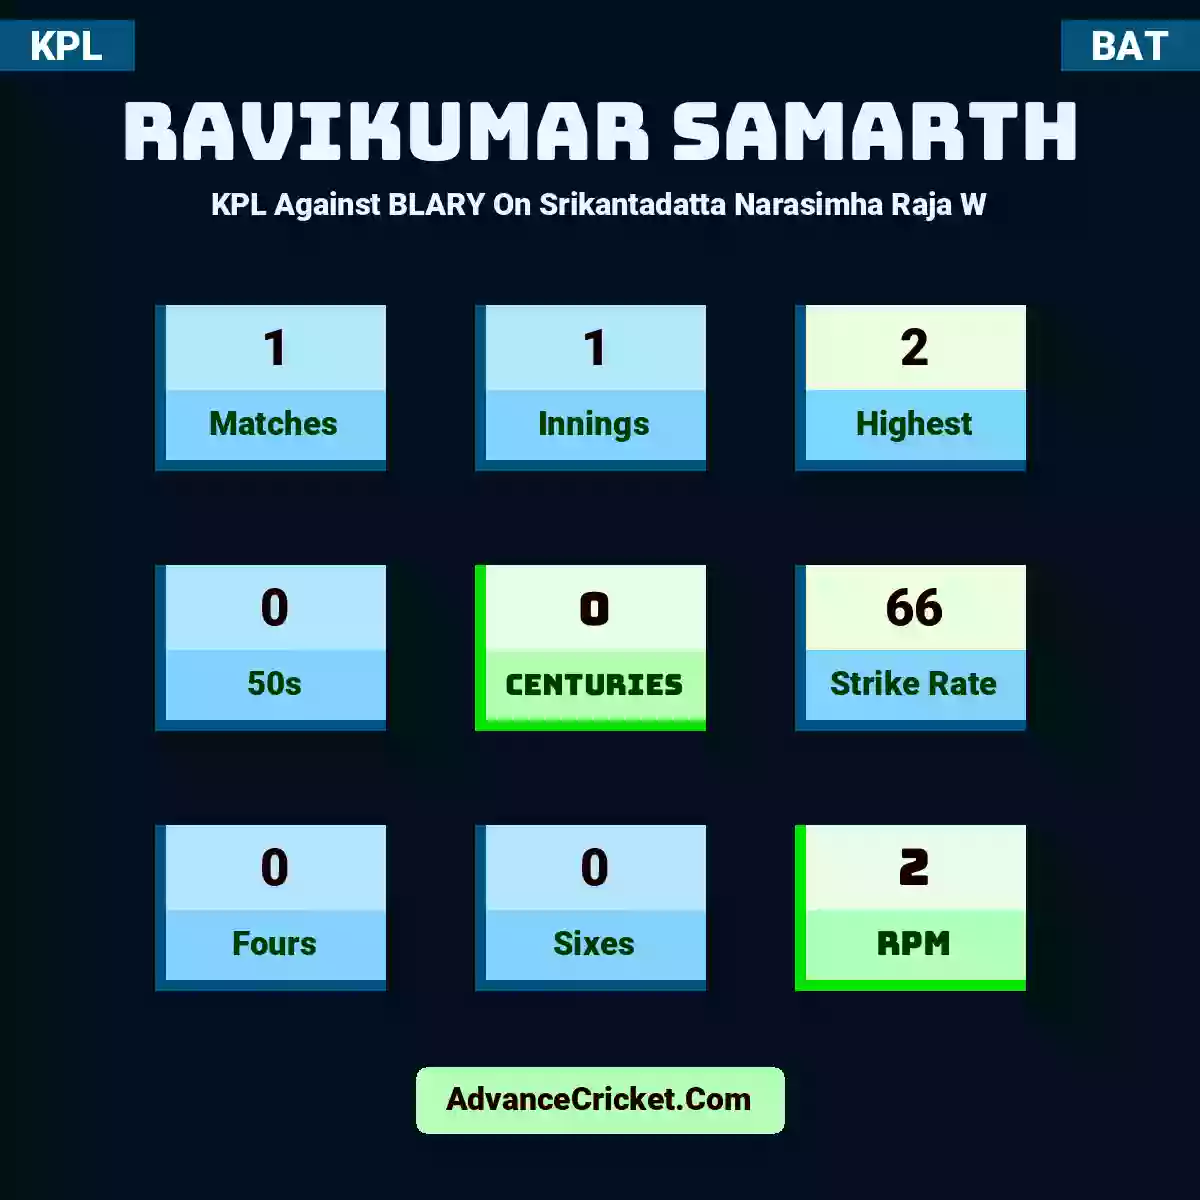 Ravikumar Samarth KPL  Against BLARY On Srikantadatta Narasimha Raja W, Ravikumar Samarth played 1 matches, scored 2 runs as highest, 0 half-centuries, and 0 centuries, with a strike rate of 66. R.Samarth hit 0 fours and 0 sixes, with an RPM of 2.